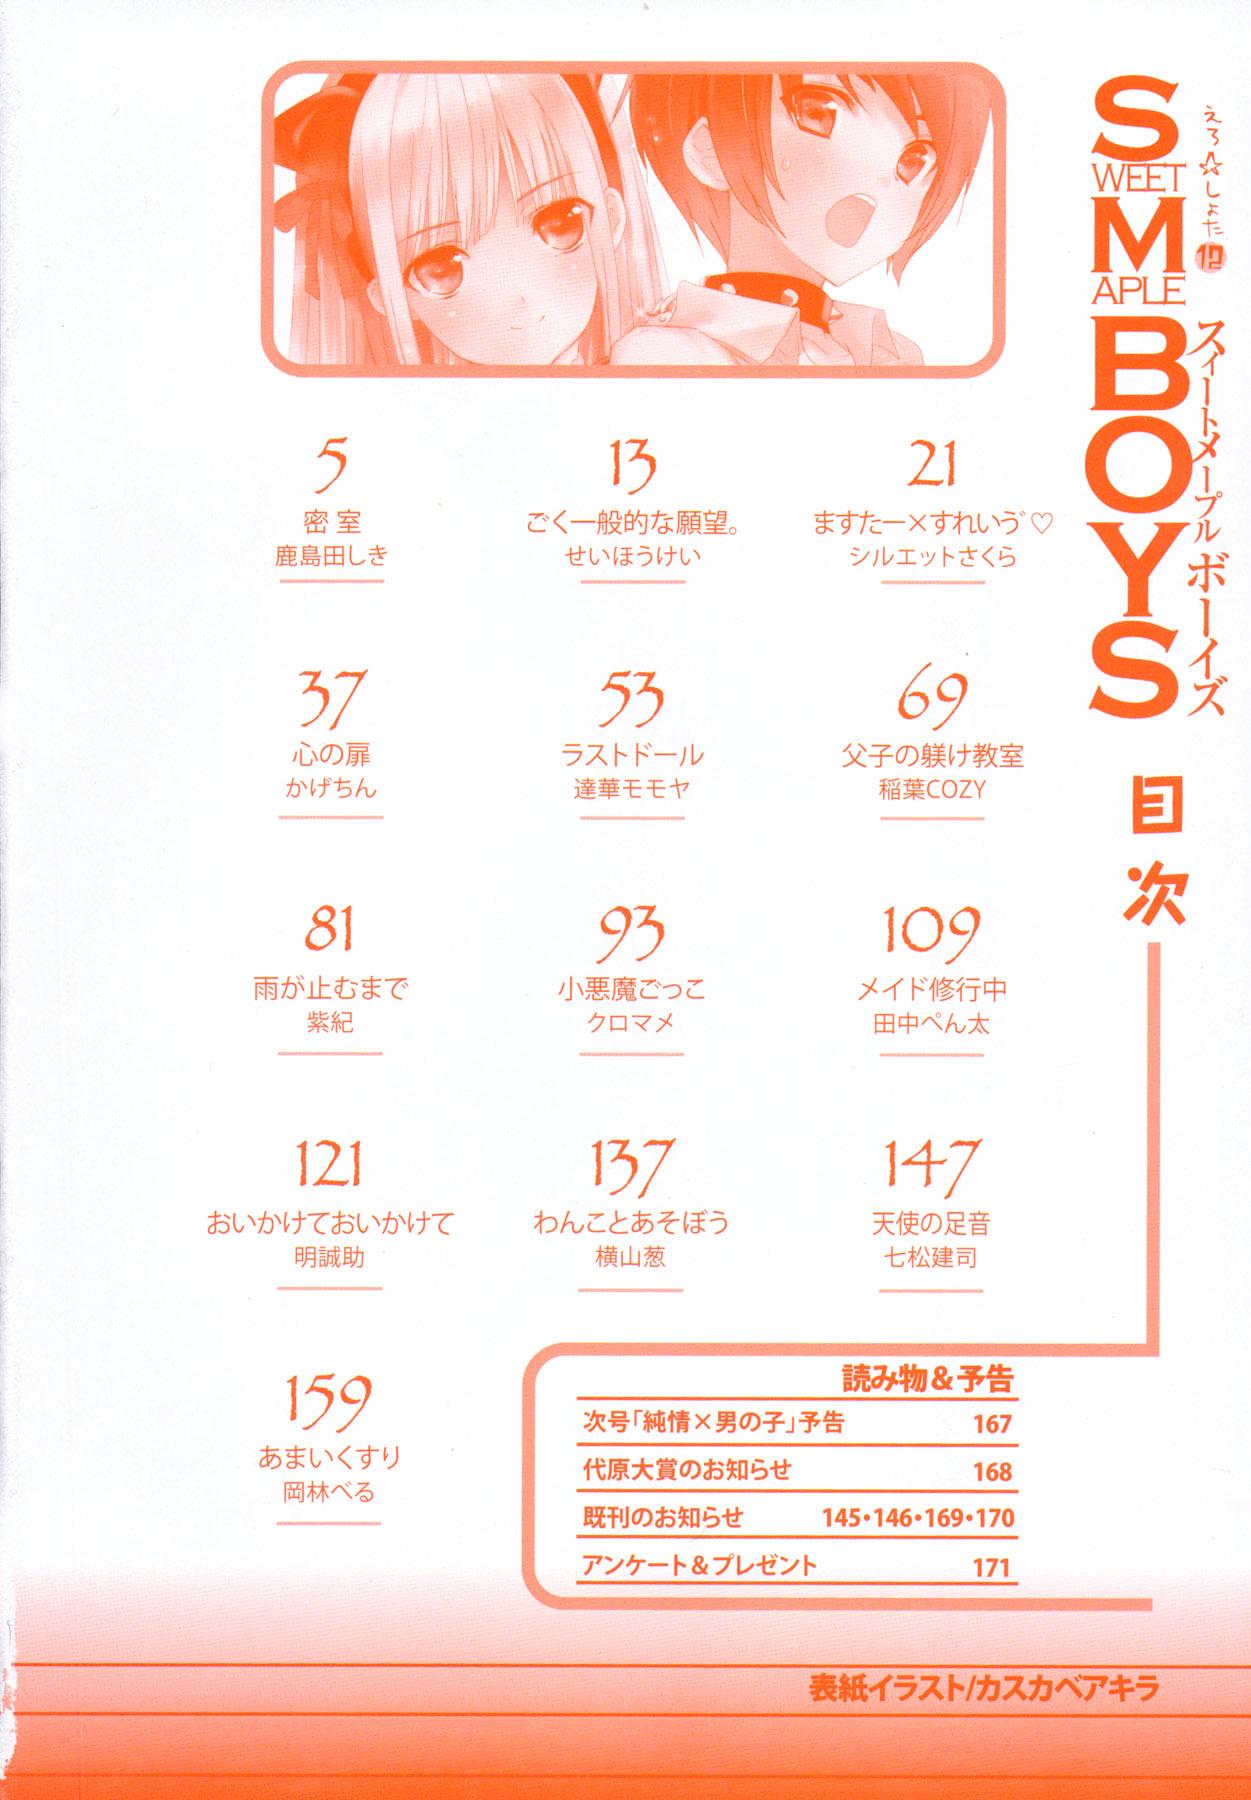 Ero Shota 12 - Sweet Maple Boys 2